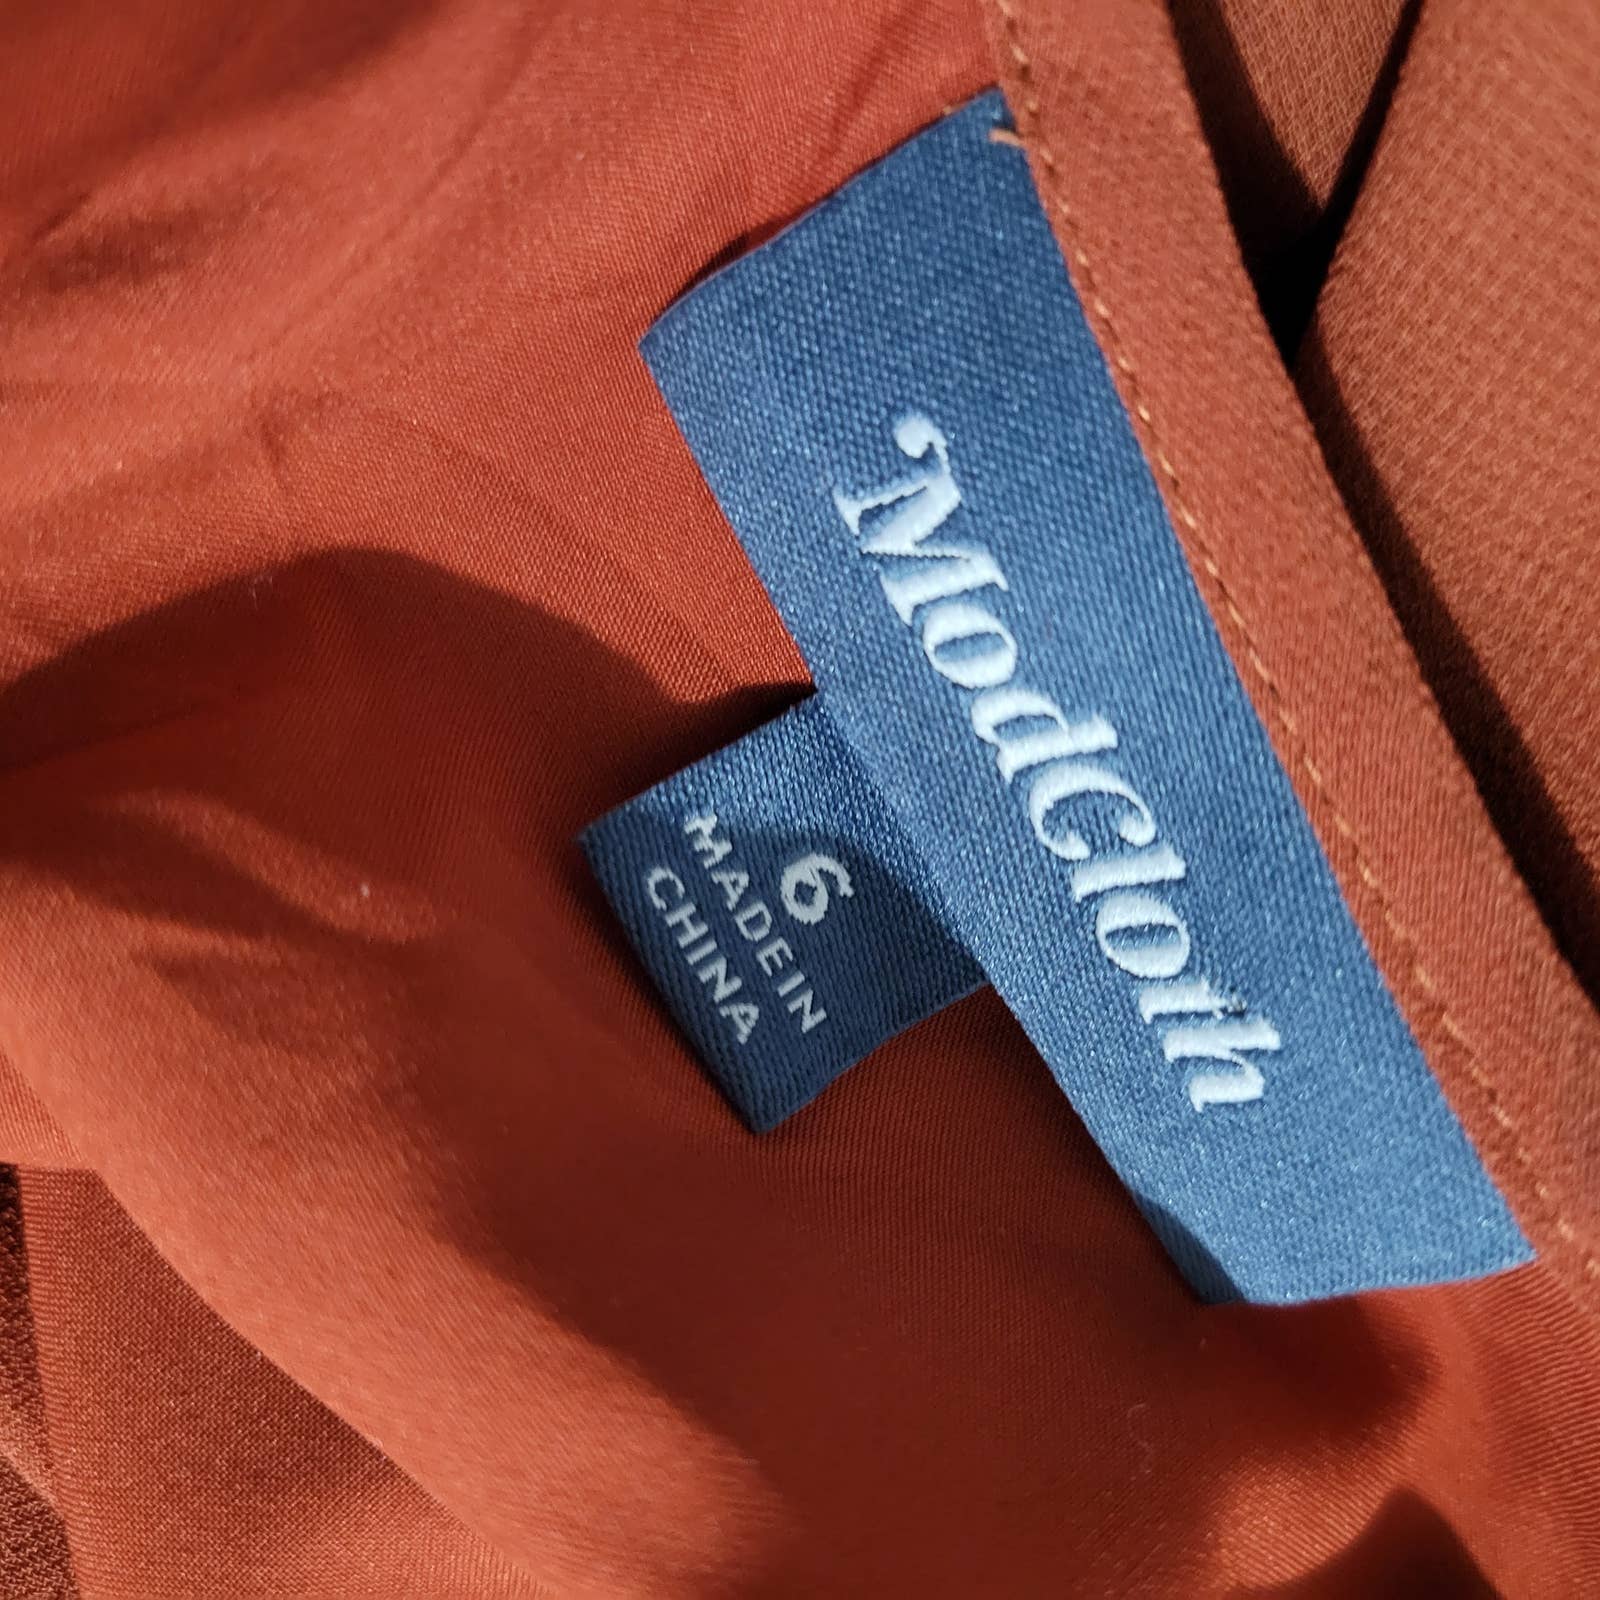 Modcloth Midi Dress Rust Keen on Pleats Orange Sheer Chiffon Secretary Retro Size 6